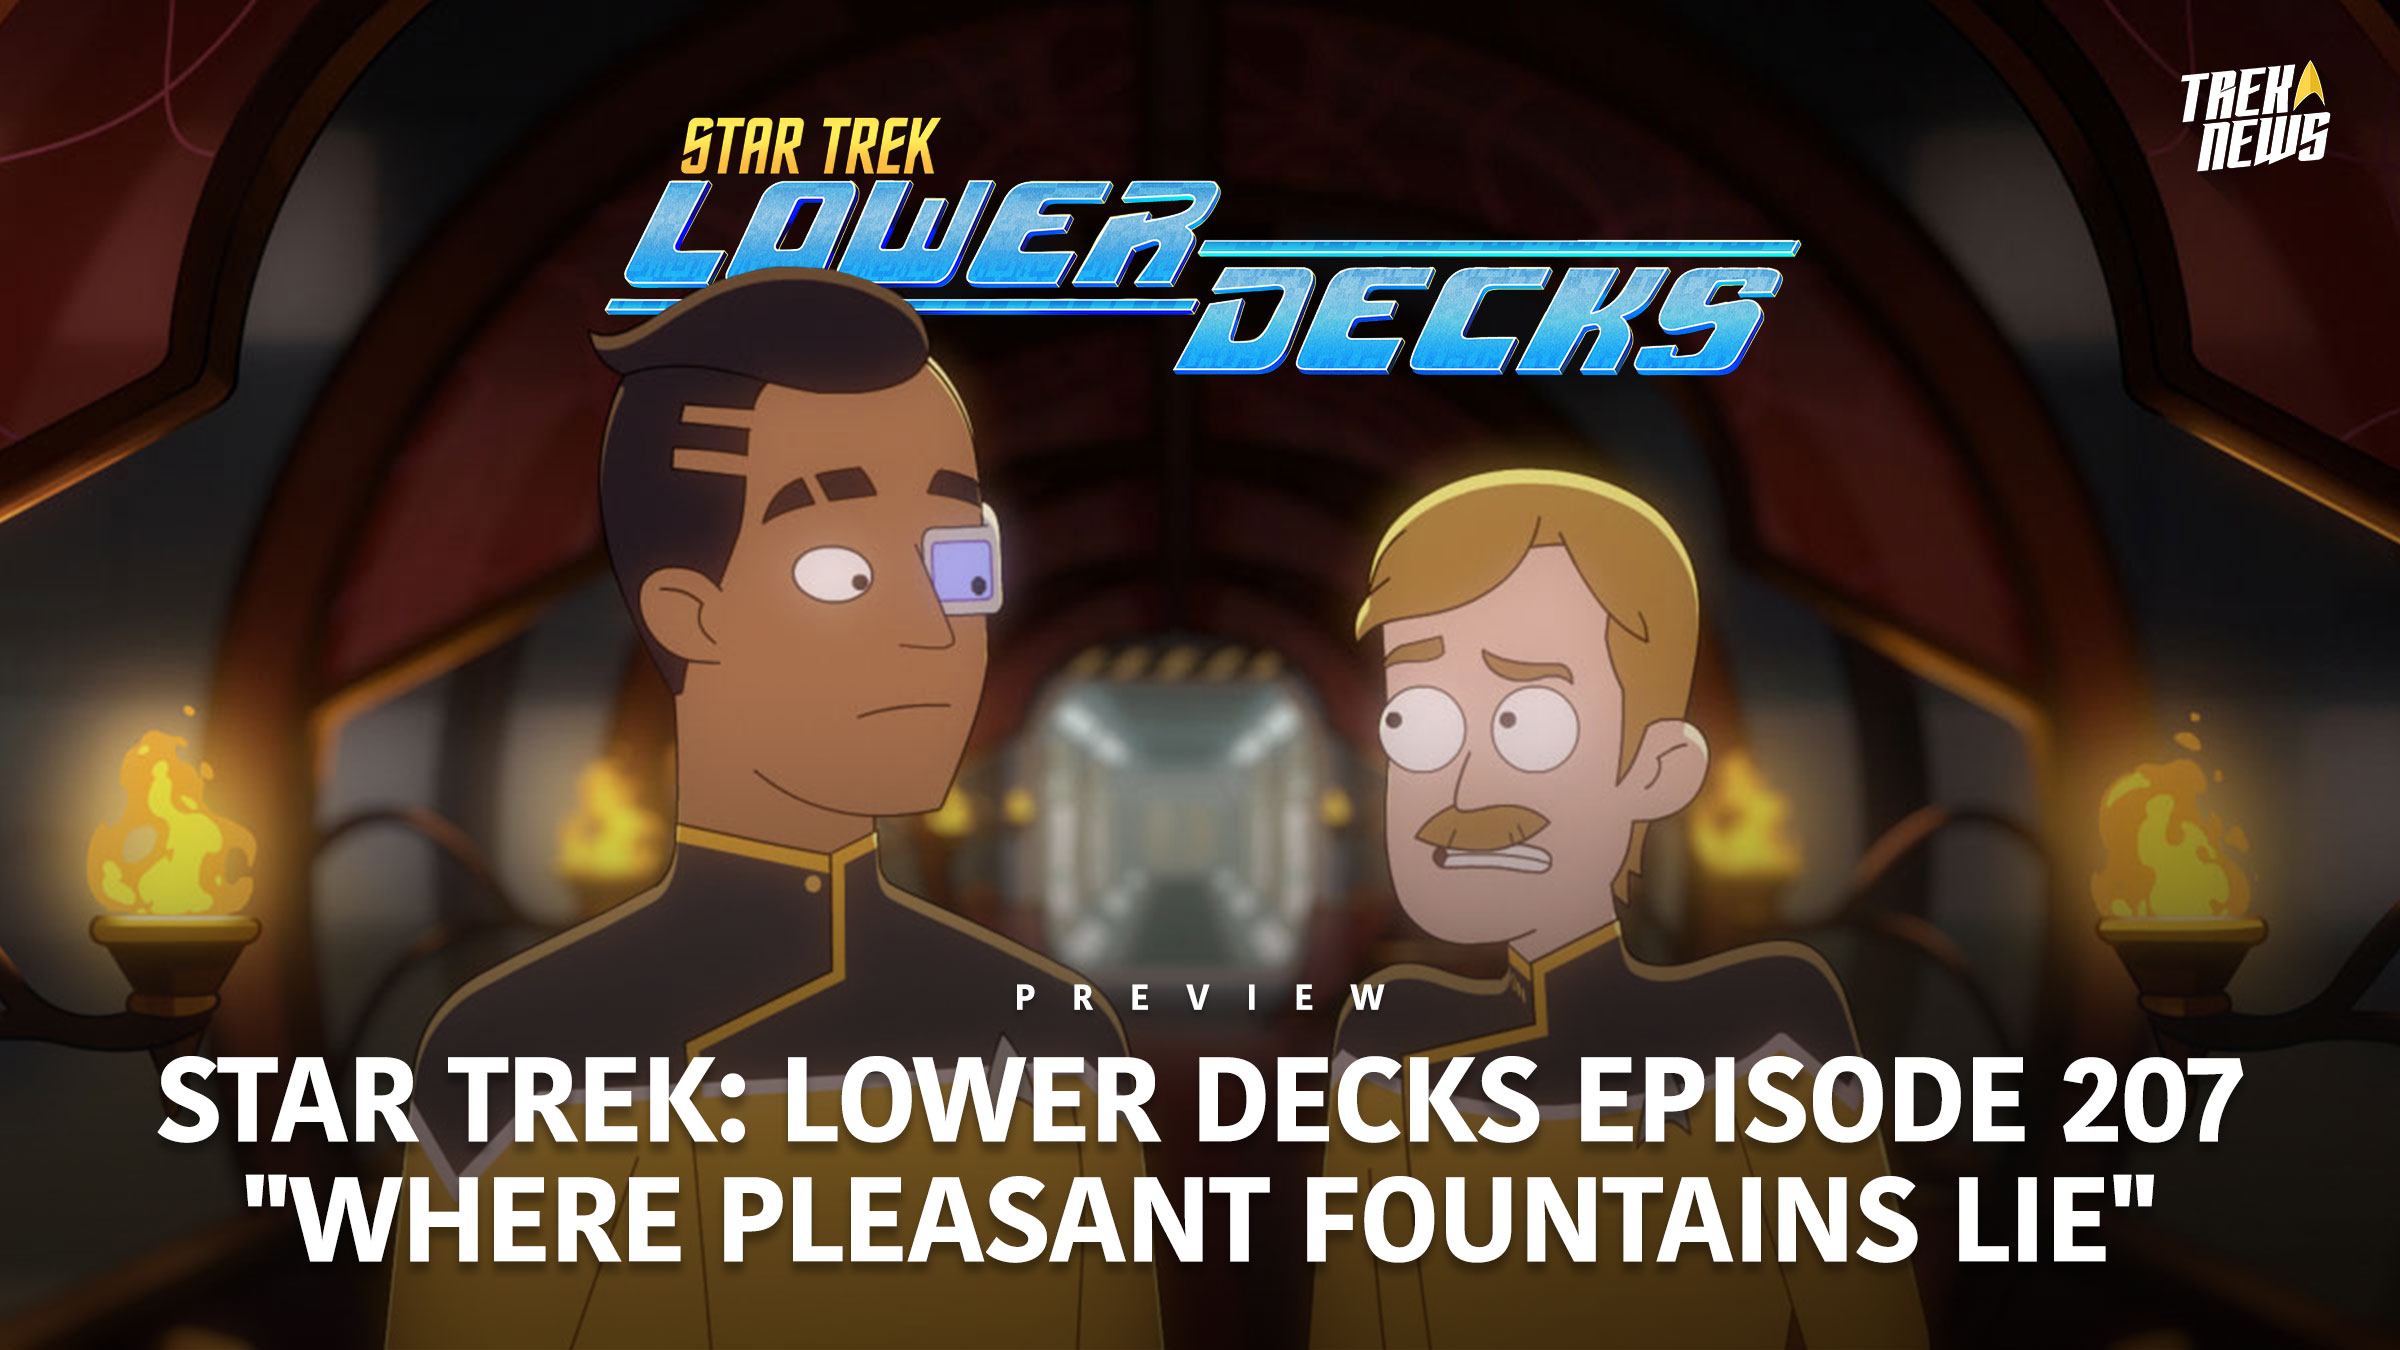 New Images From Star Trek: Lower Decks Season 2 Episode 7 “Where Pleasant Fountains Lie”